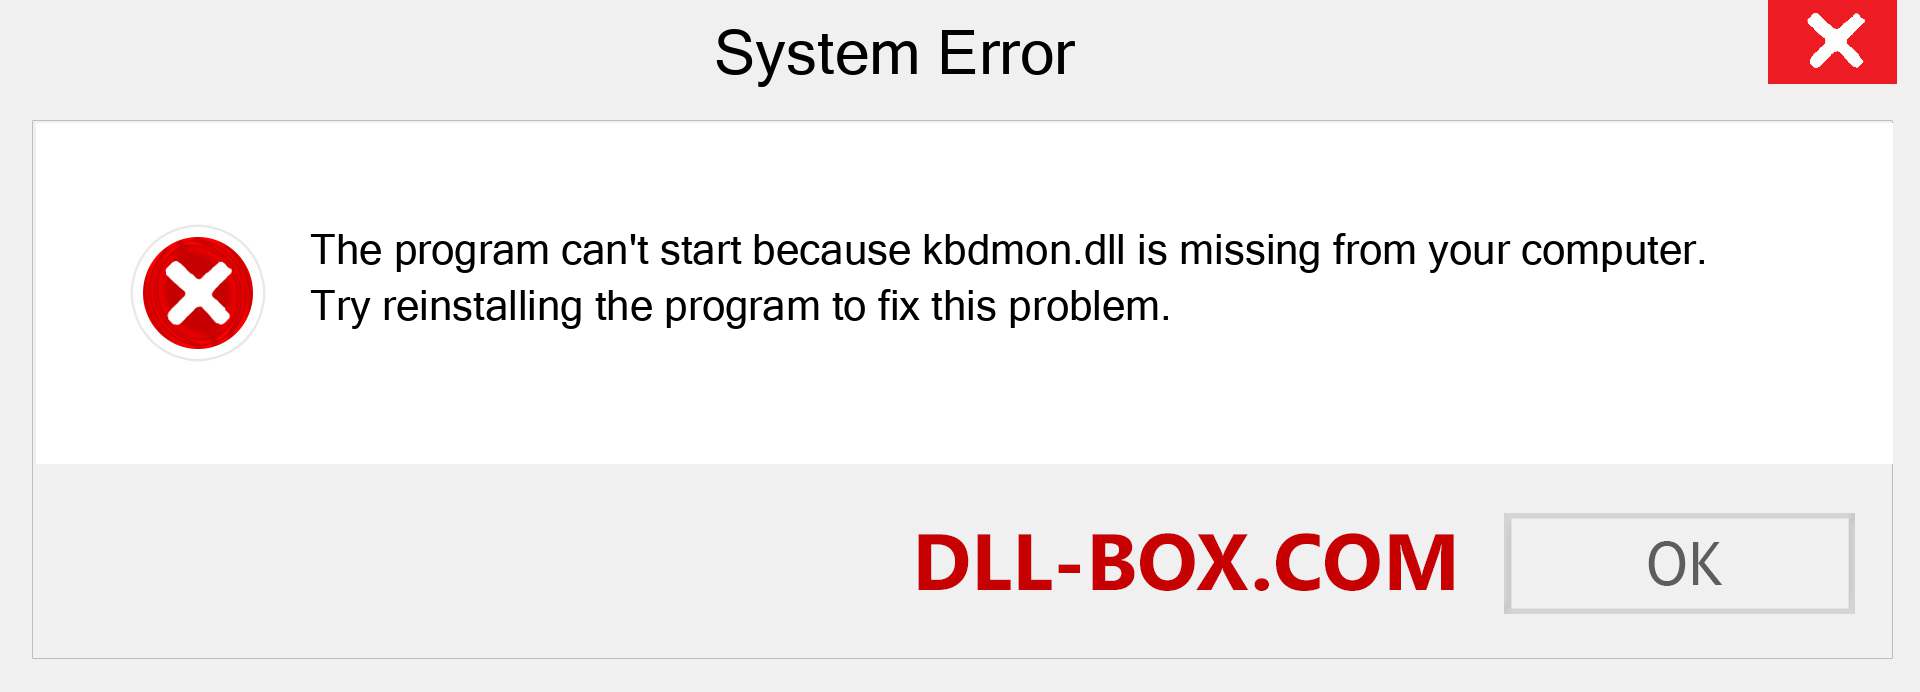  kbdmon.dll file is missing?. Download for Windows 7, 8, 10 - Fix  kbdmon dll Missing Error on Windows, photos, images